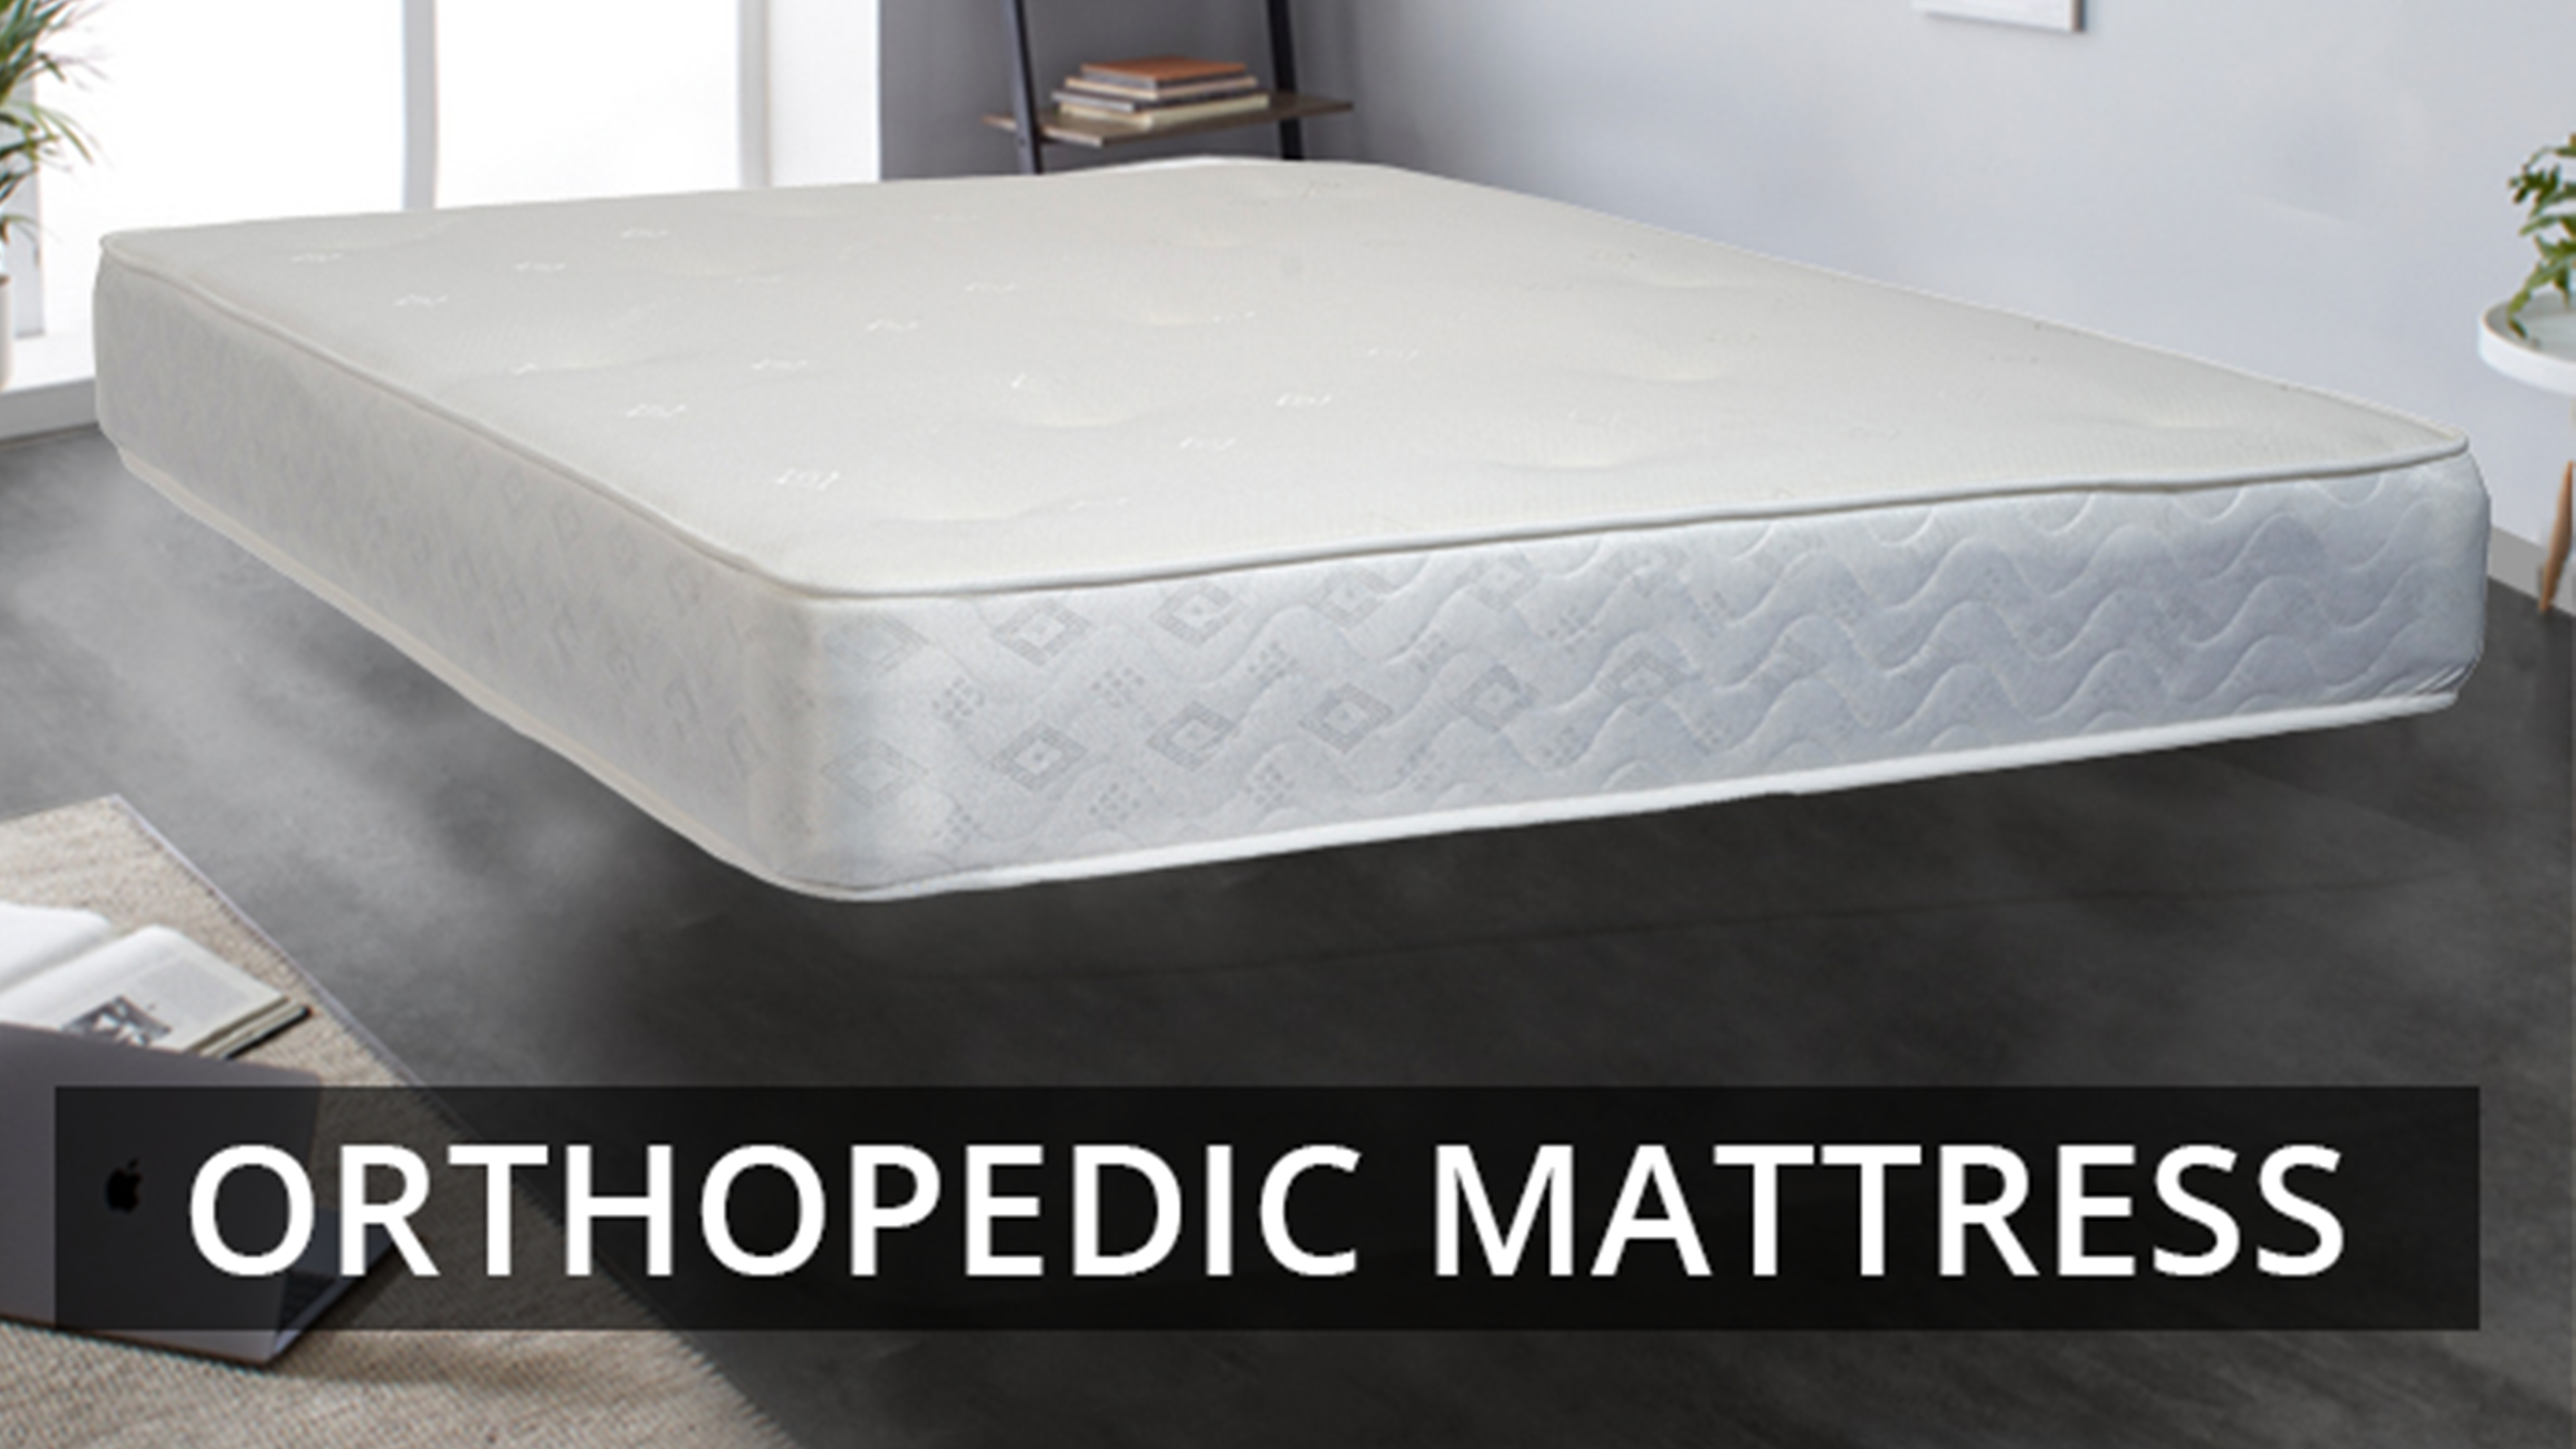 Black Venice Divan Bed Set With Orthopedic Mattress.